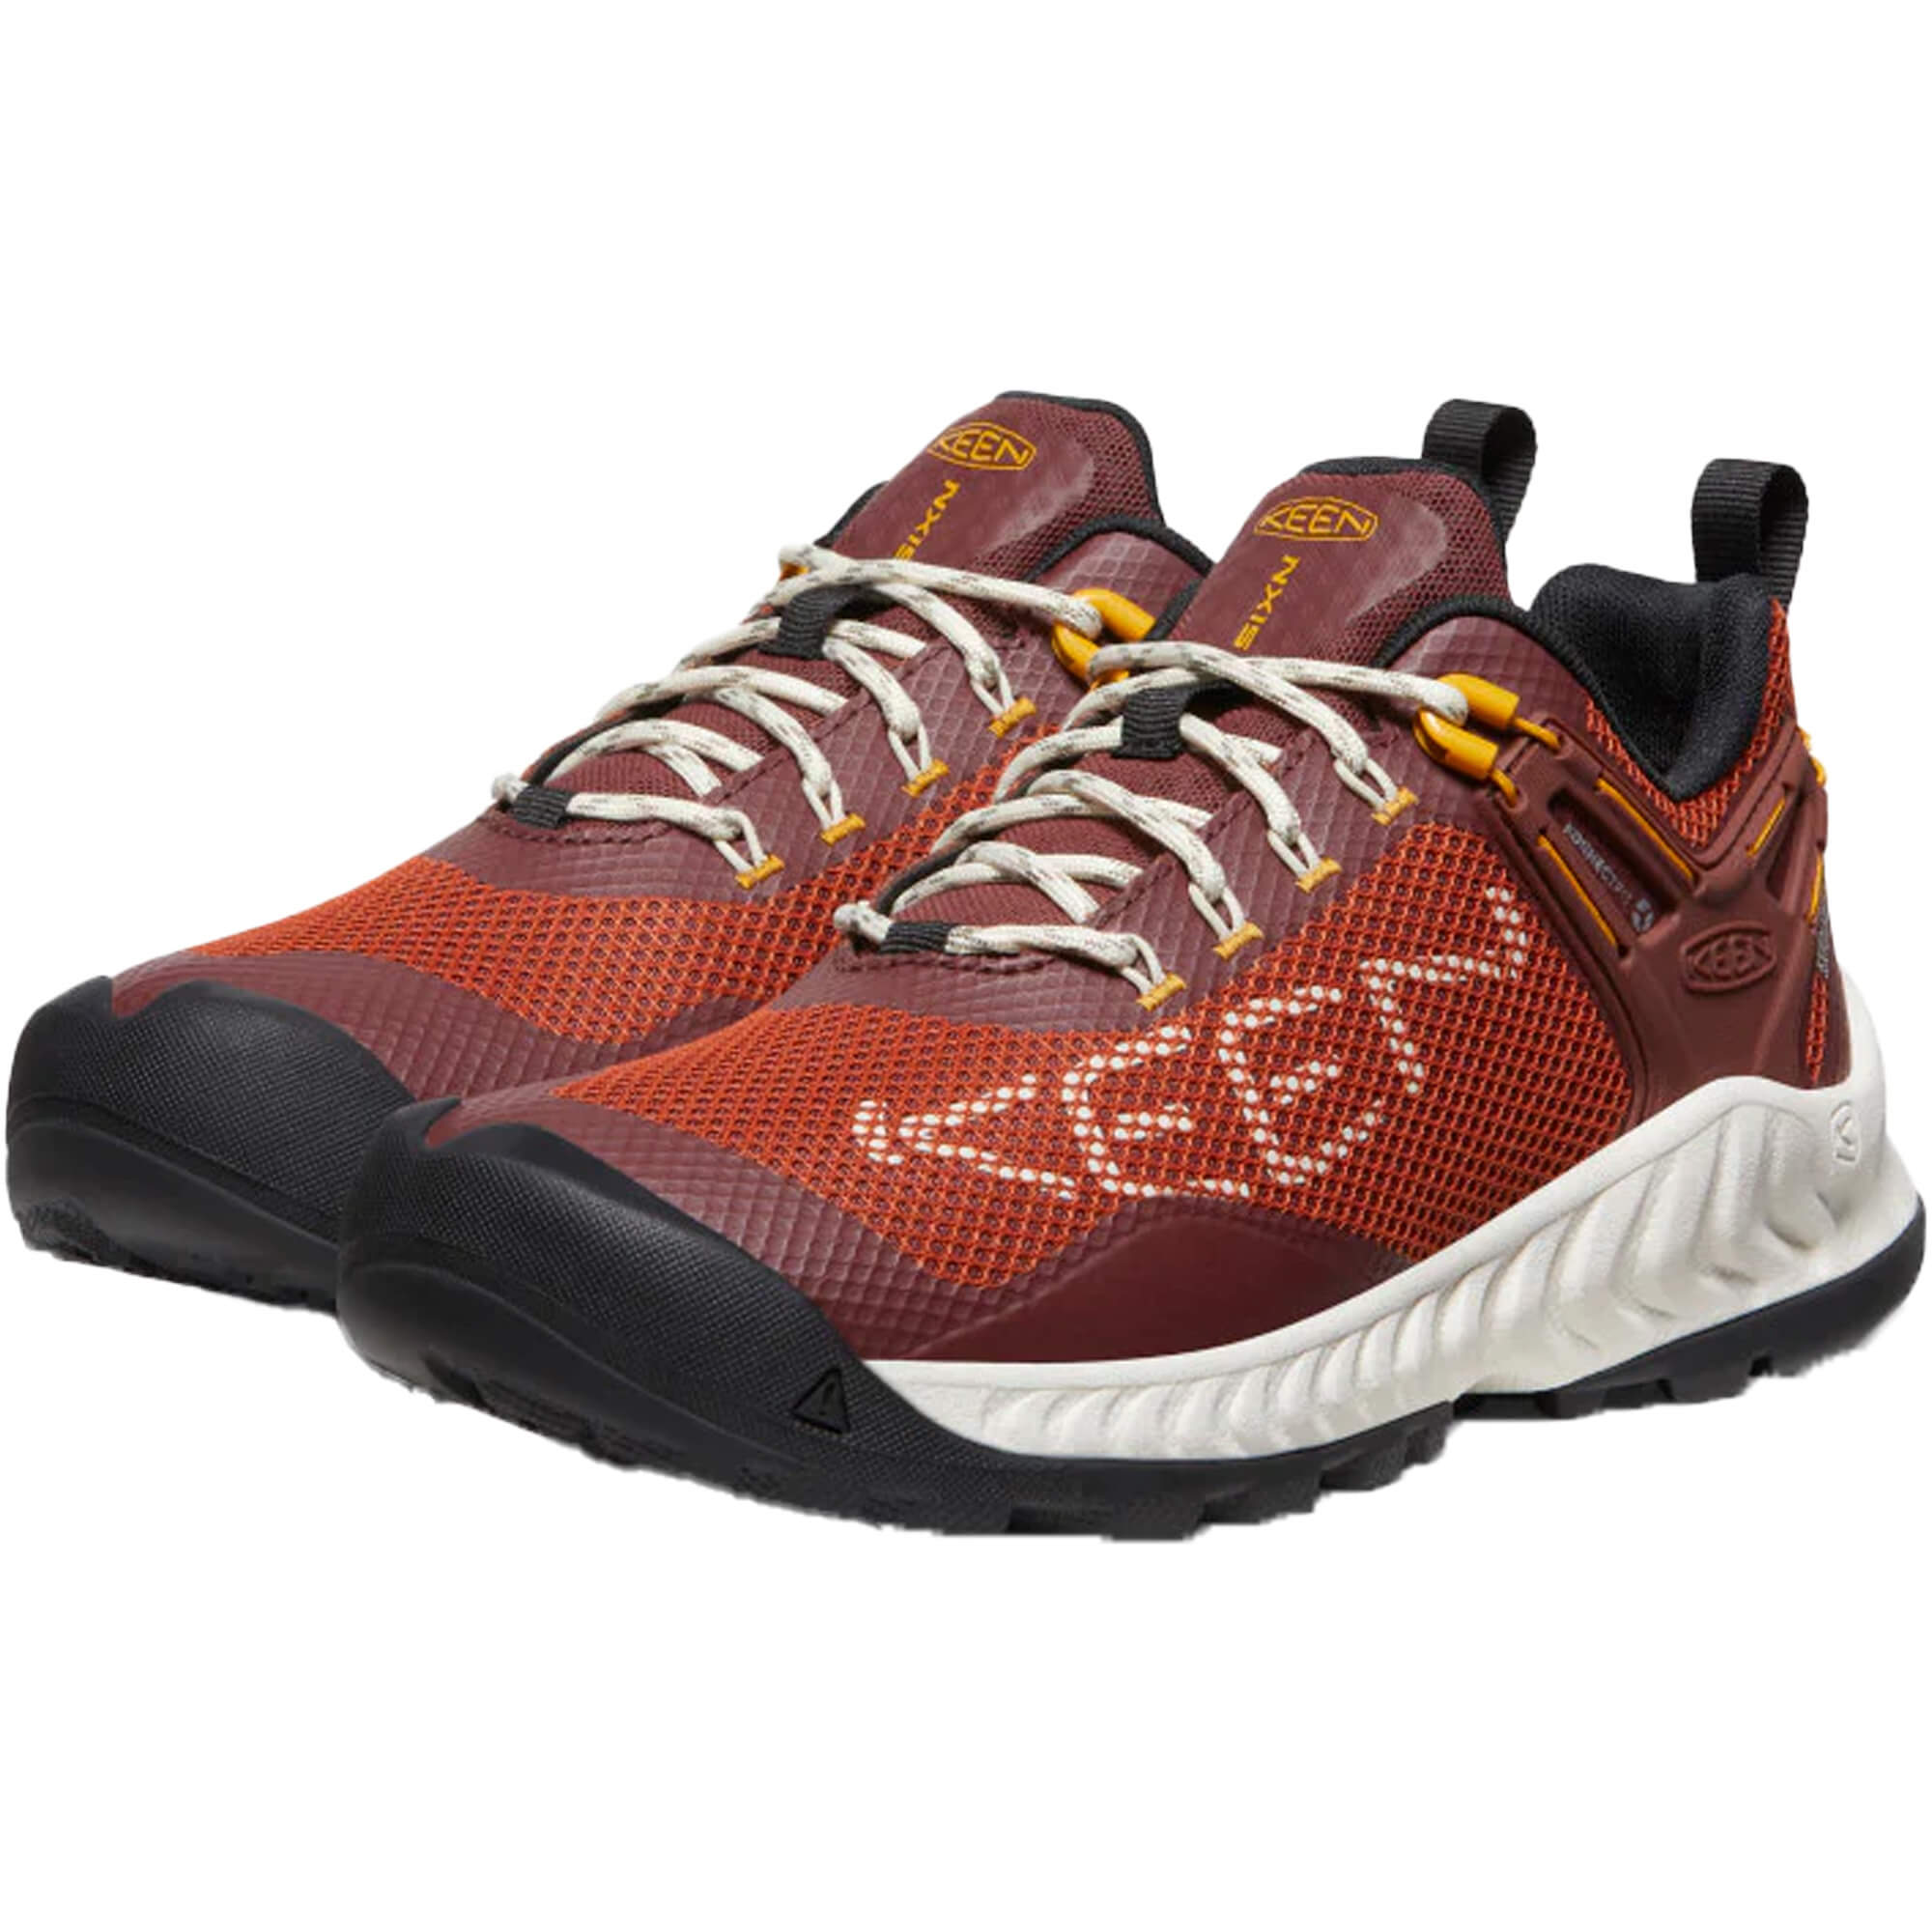 Keen NXIS EVO Women's Waterproof Hiking Shoes